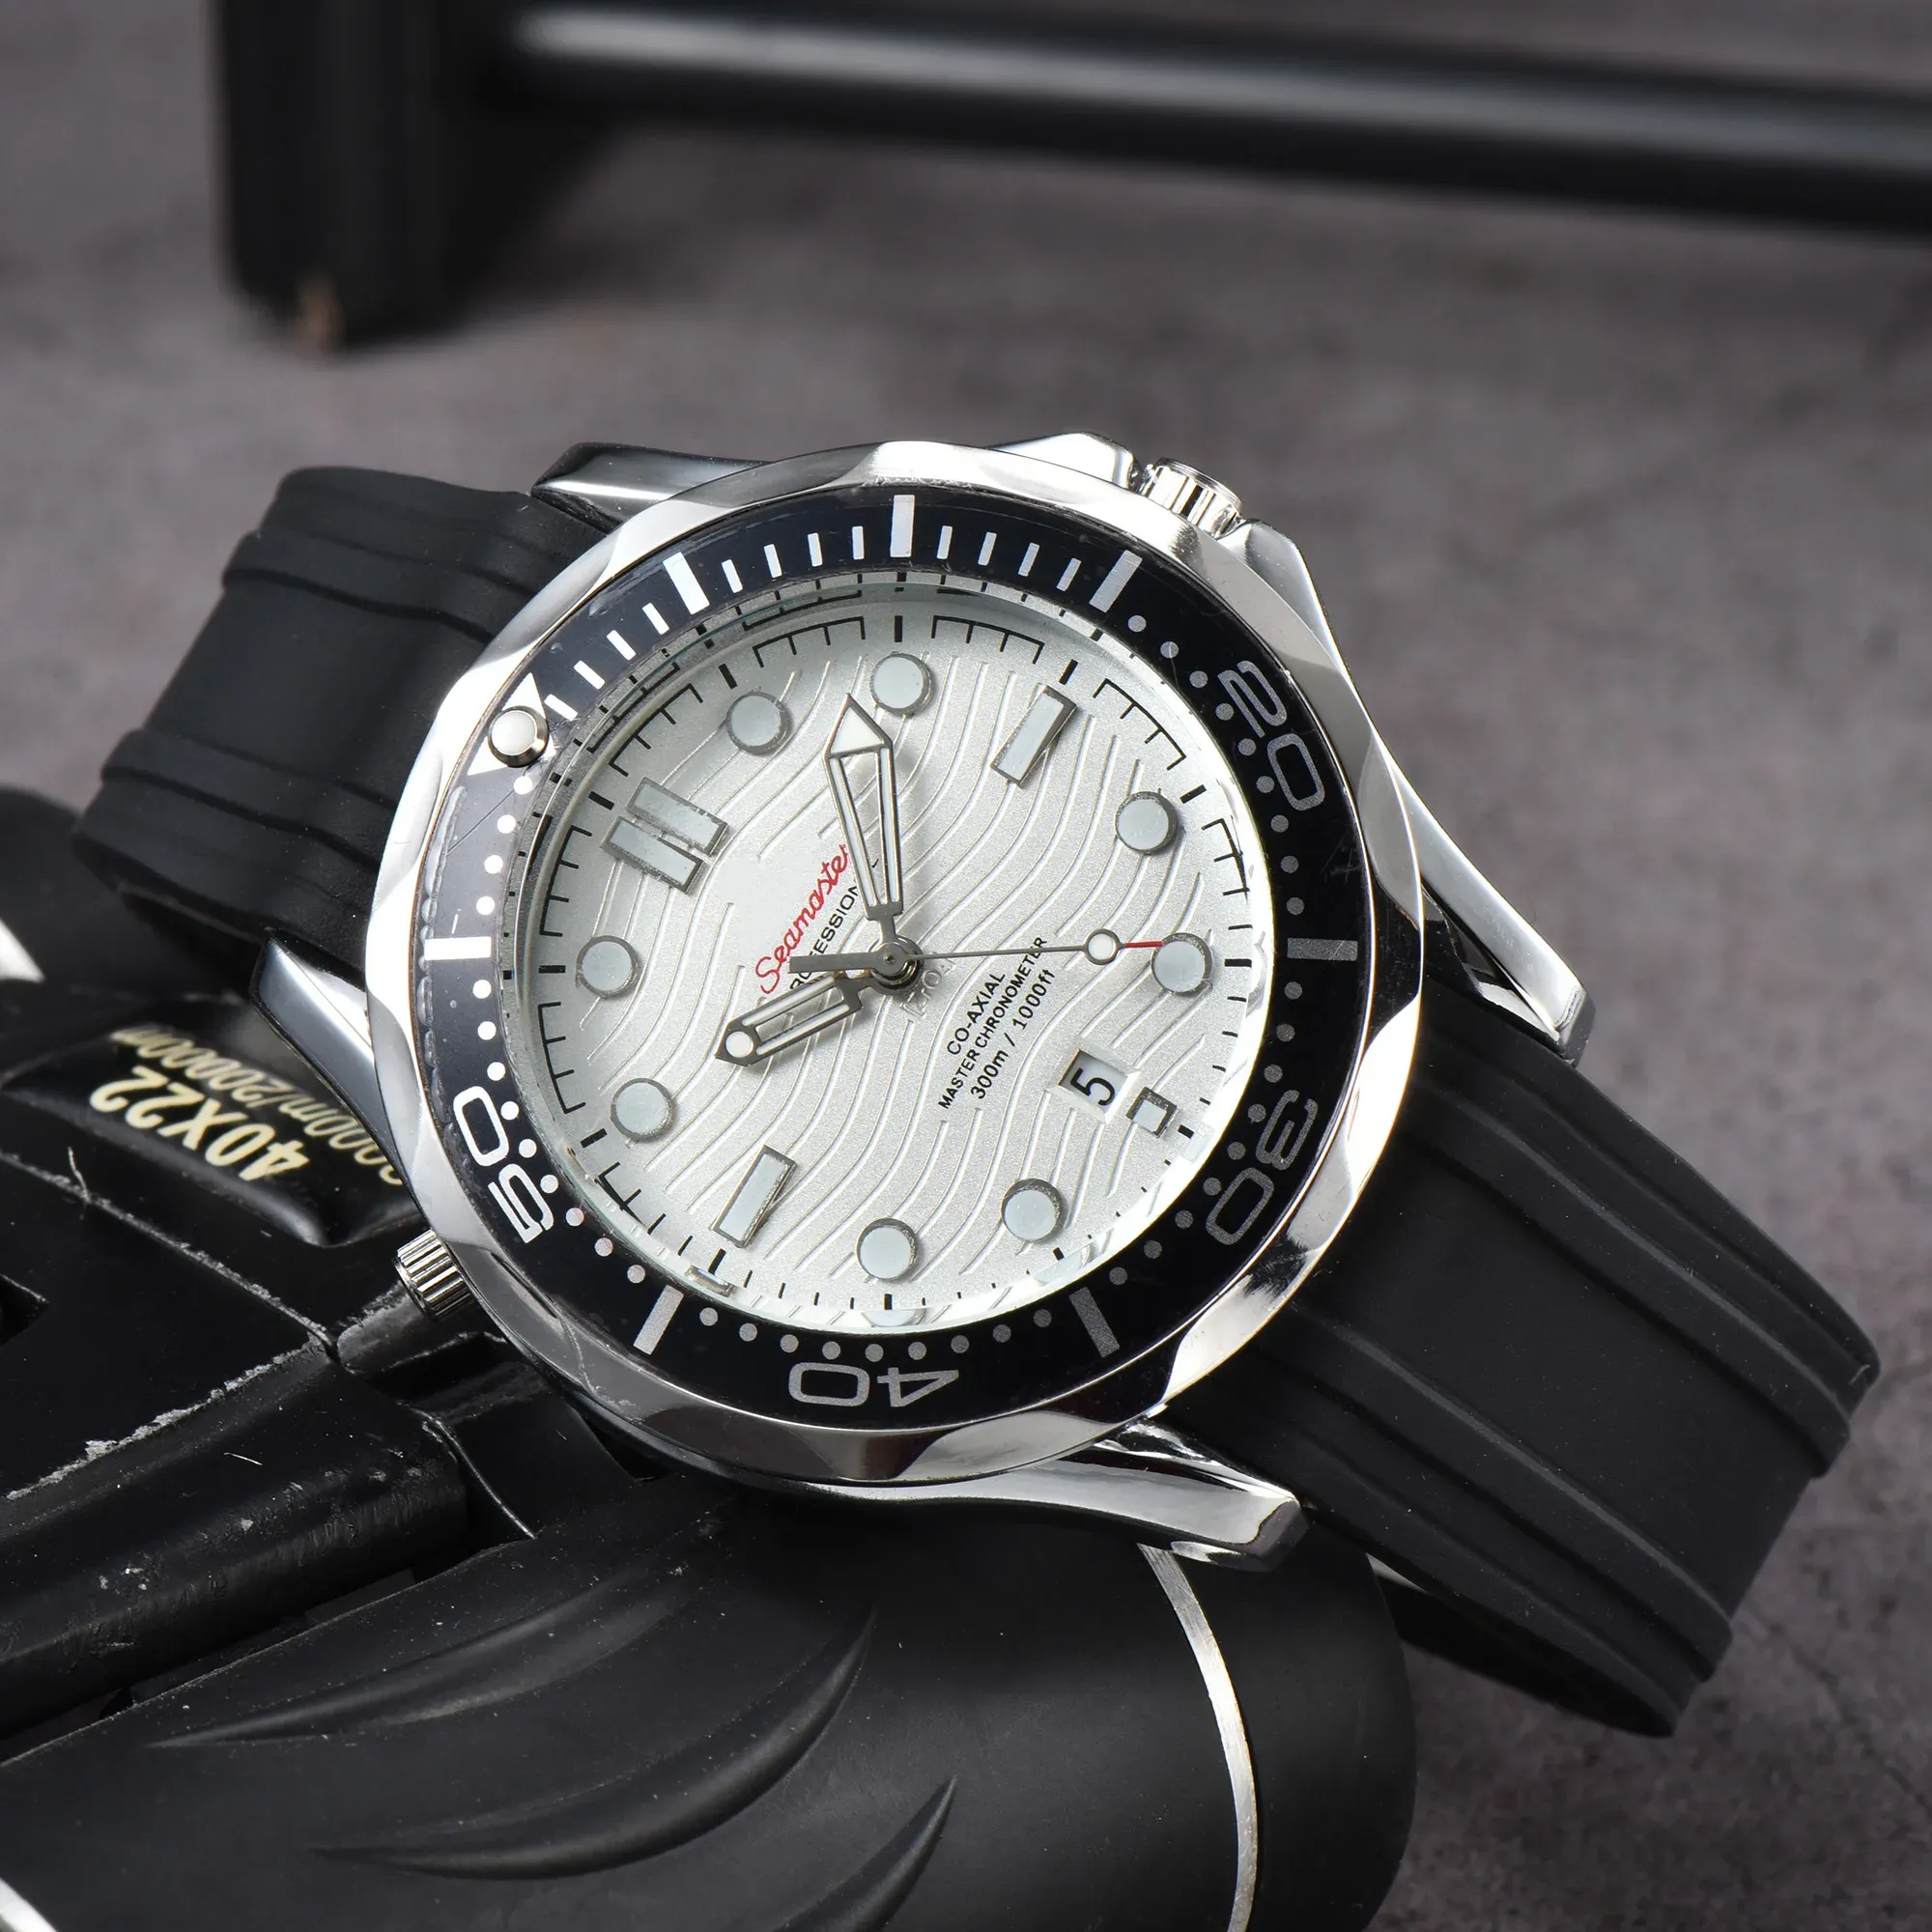 Omeg Wrist Watches For Men New Mens Watches All Dial Work Quartz Watch de alta calidad diseñador de alta calidad cronógrafo de la marca de lujo Roma Band Mods Fashion Omegas